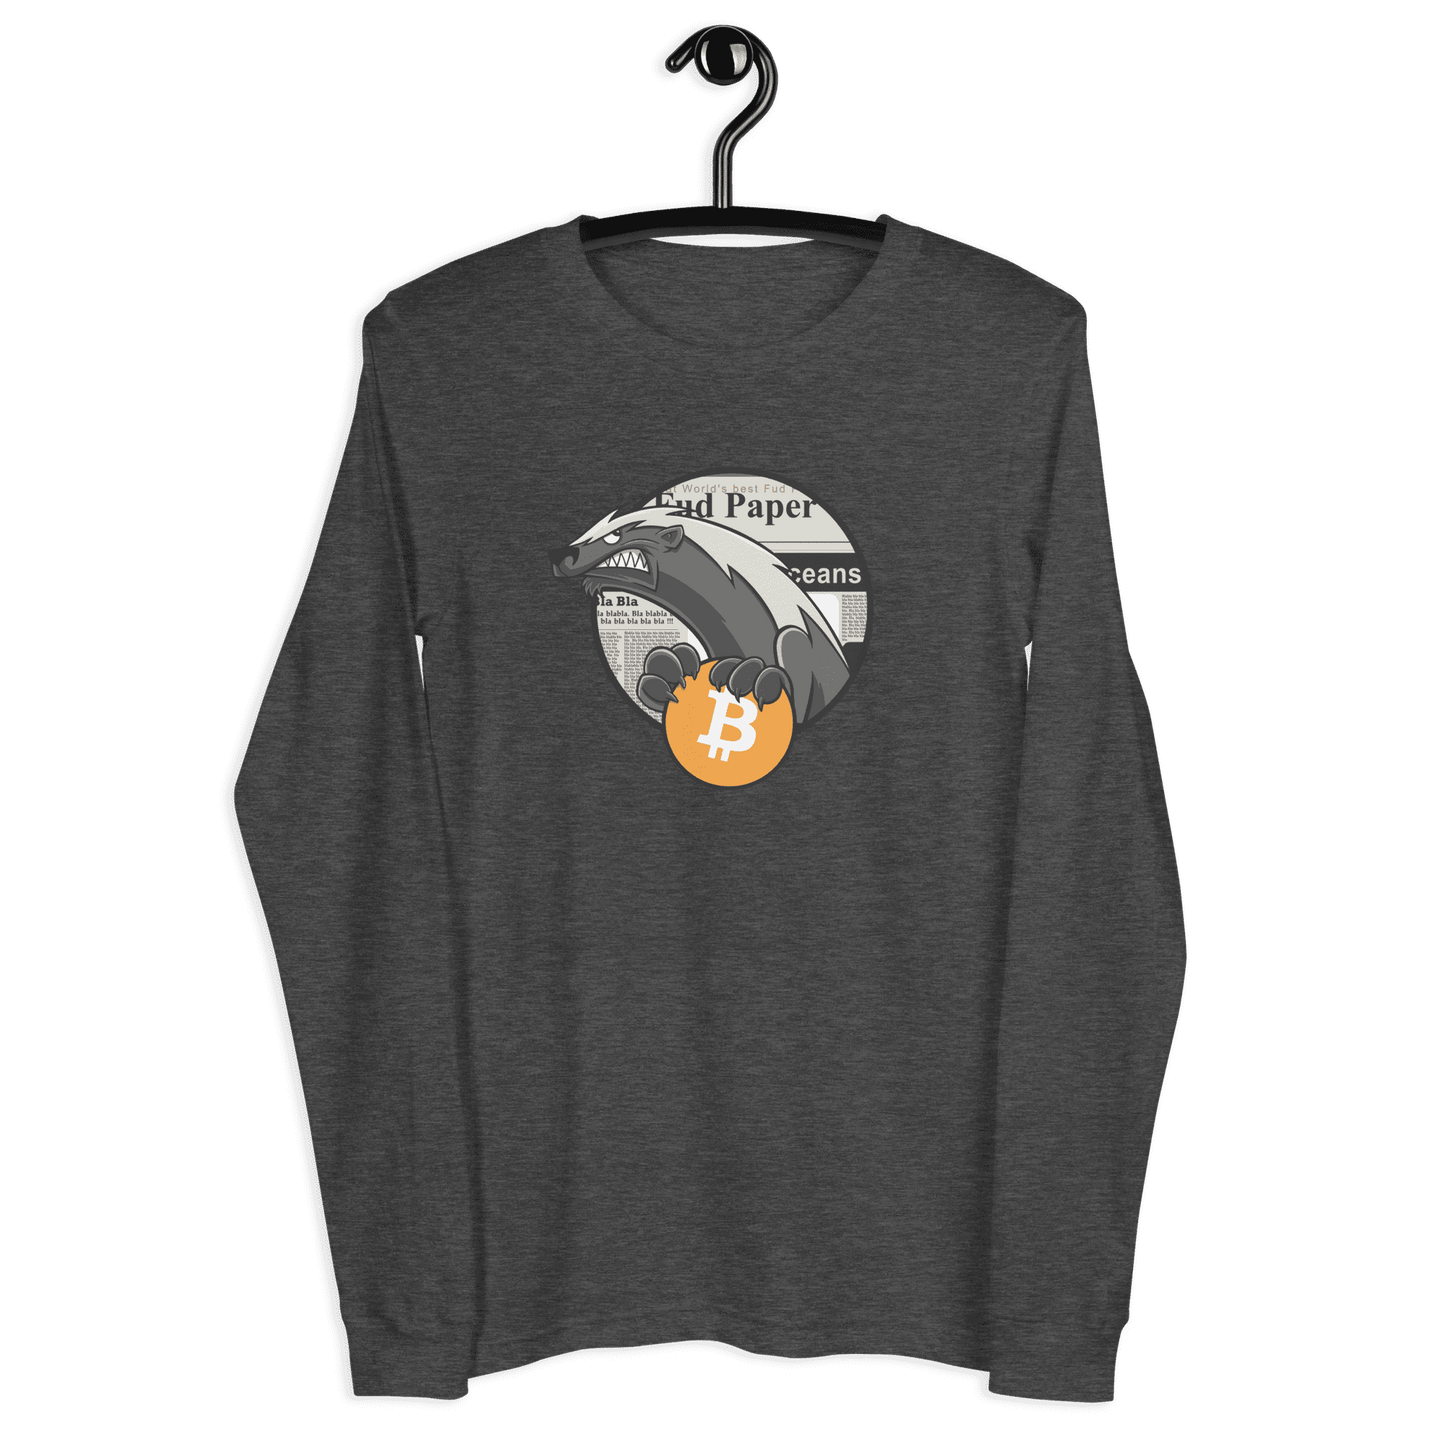 Honigdachs Unisex Langarm T-Shirt